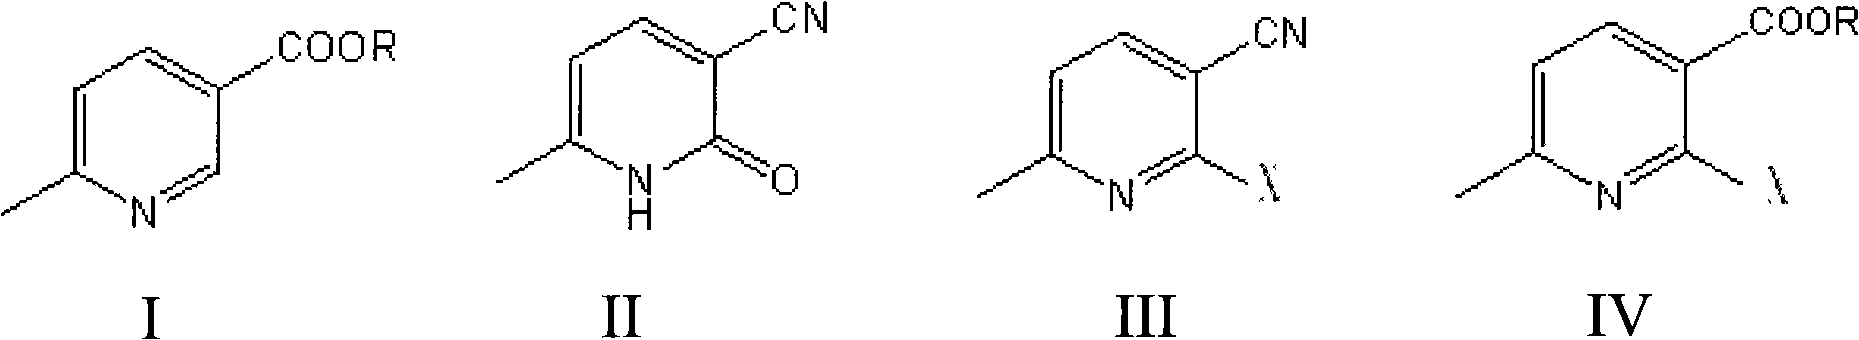 Method for preparing 6-methylnicotinic acid etoricoxib intermediate and ester thereof